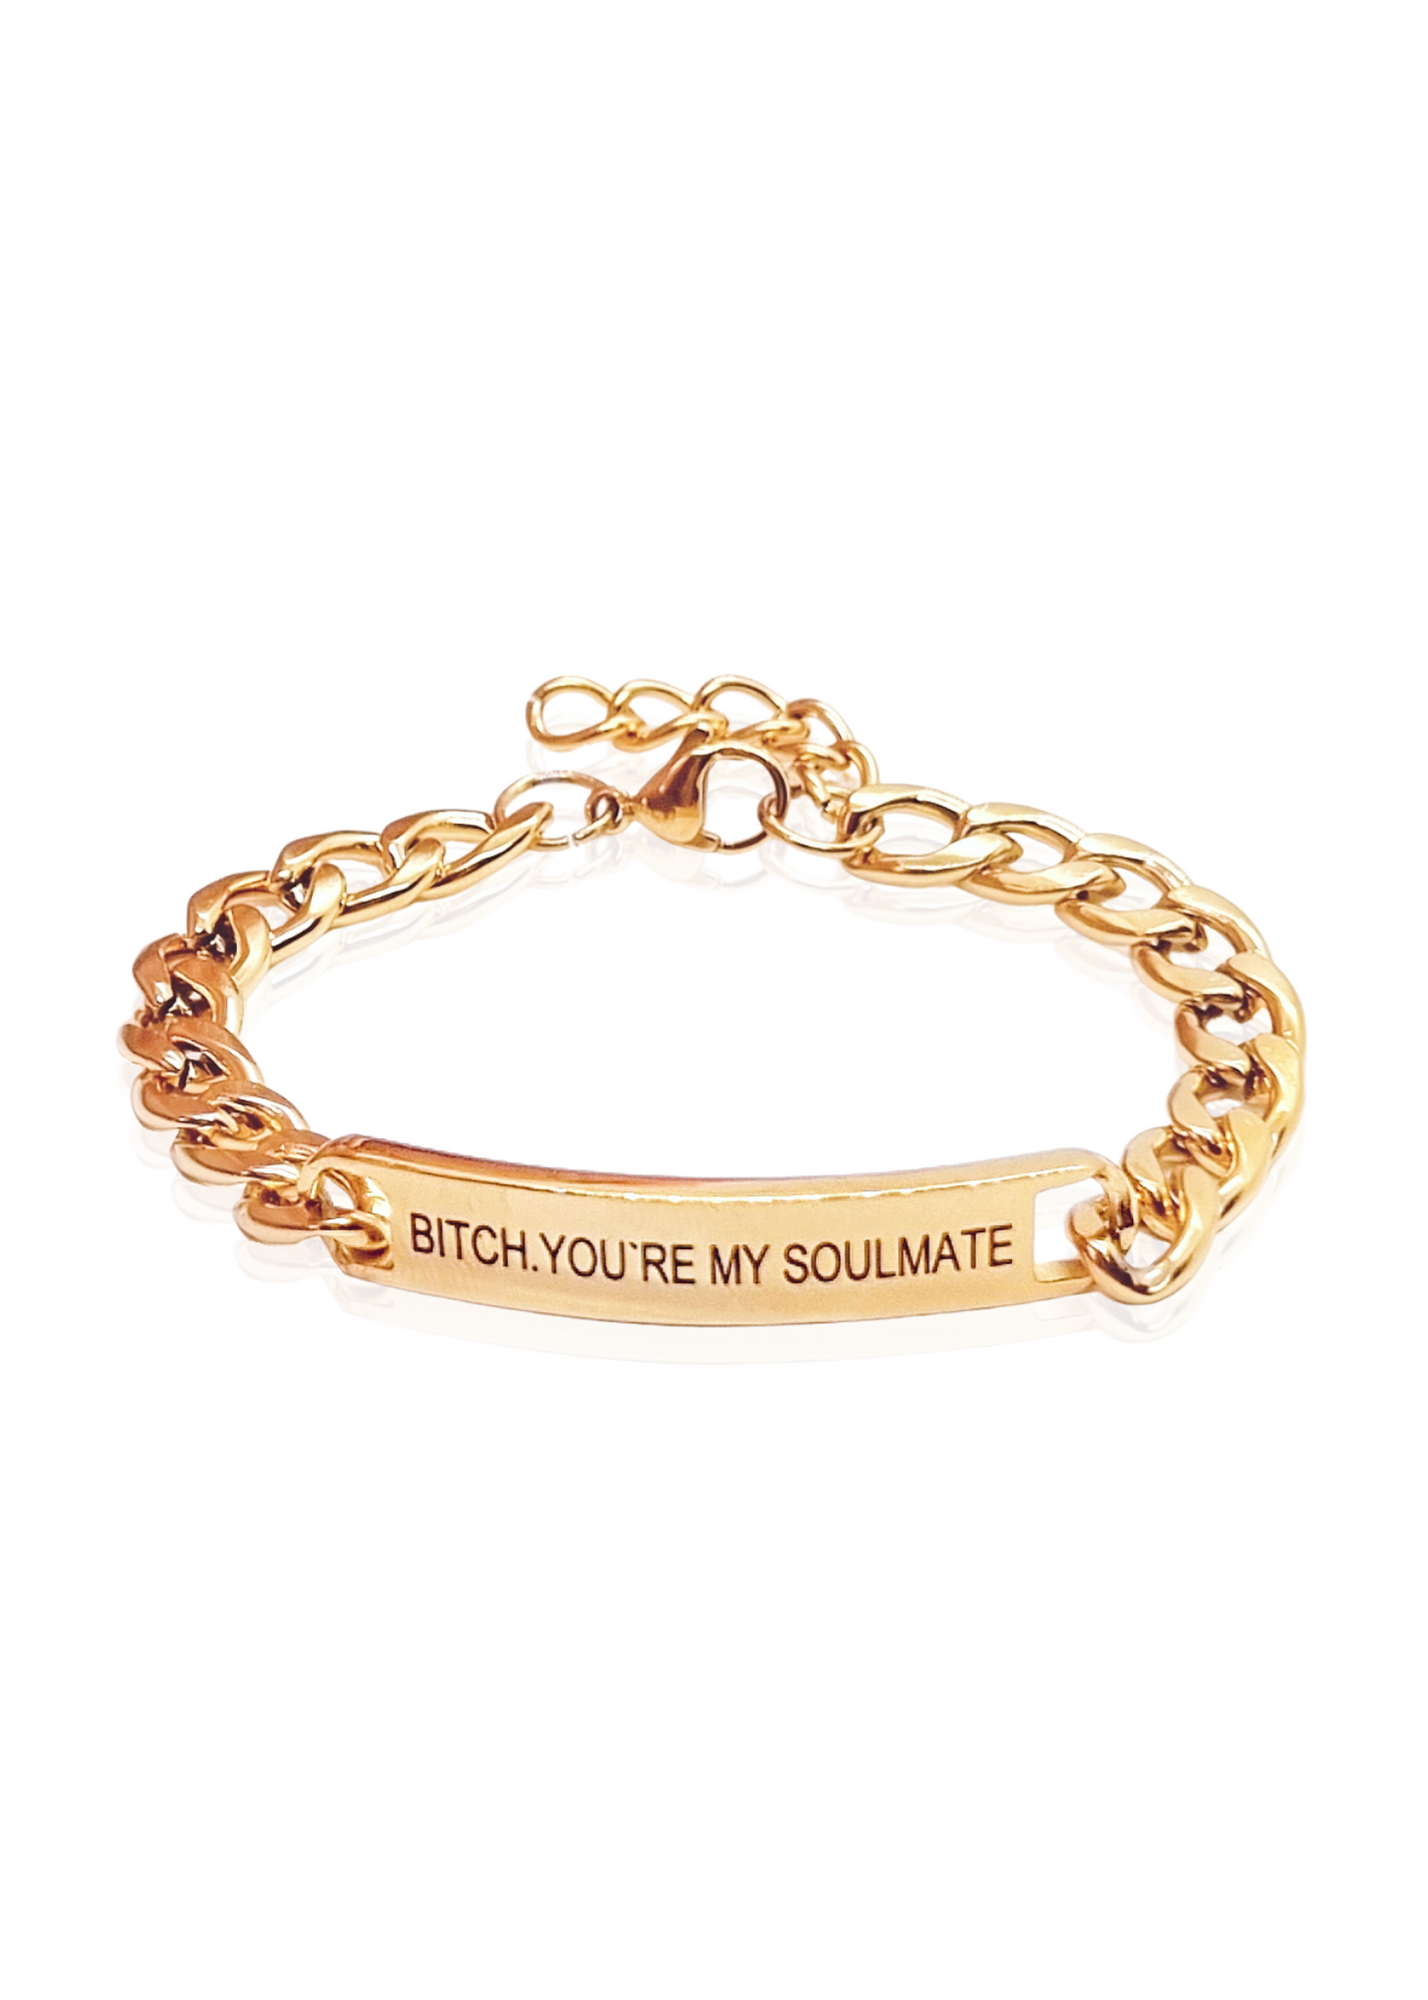 Soulmate Attract Love Healing Crystal Rose Gold Copper Reiki Bracelet |  Healing gemstone bracelets, Crystal rose gold, Infinity charm bracelet